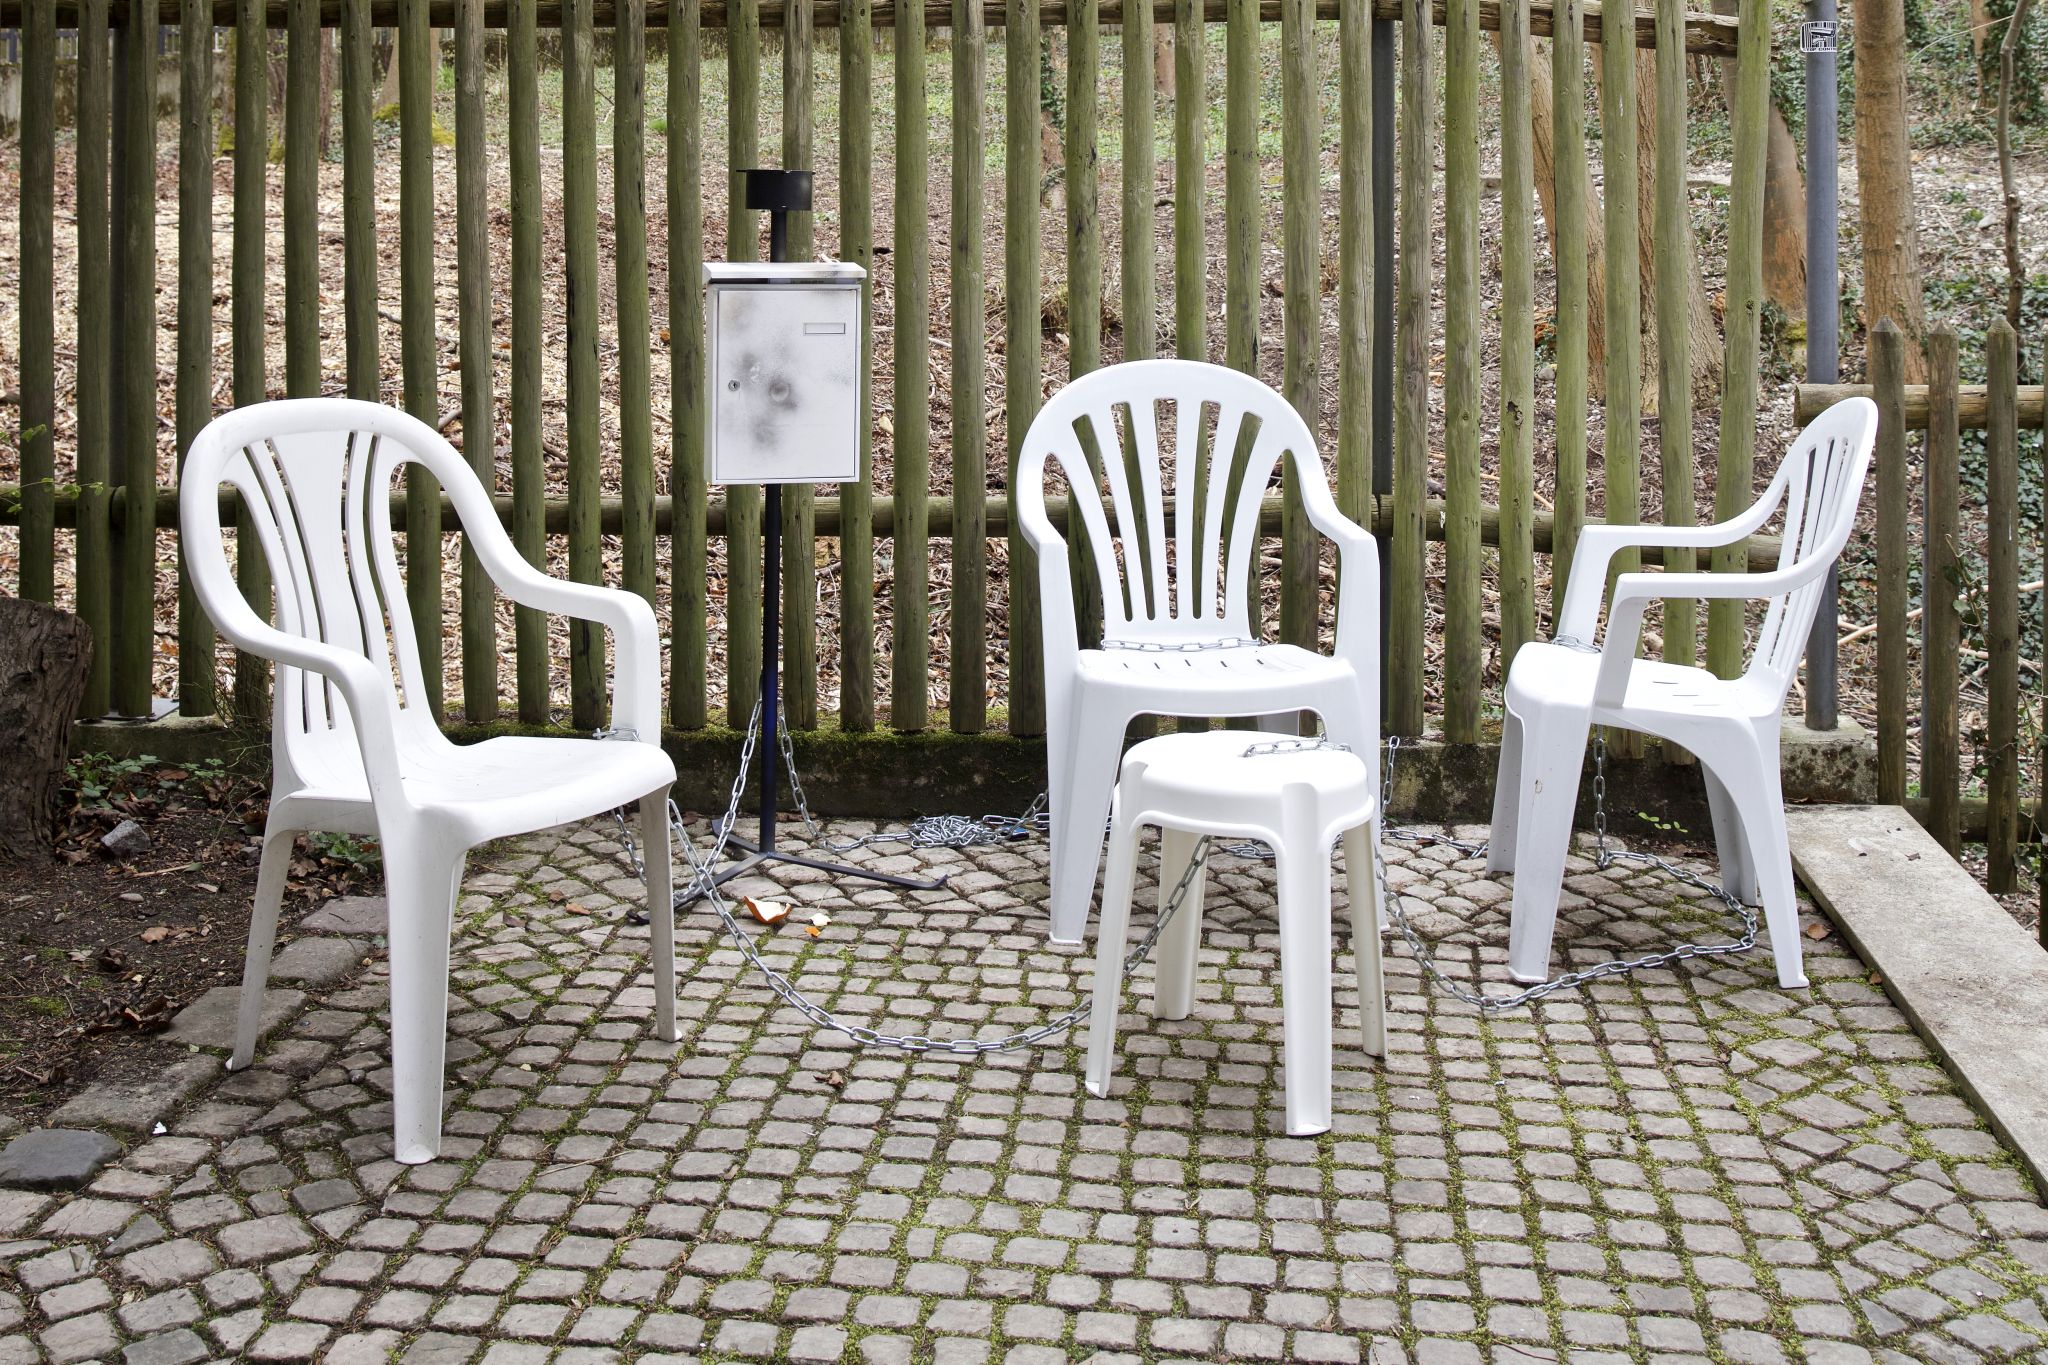 Manfred Pernice, briefkastenOrion (verlorener posten), 2015, Mail box, chain (8 meters), three garden chairs, one plastic stool, Site specific